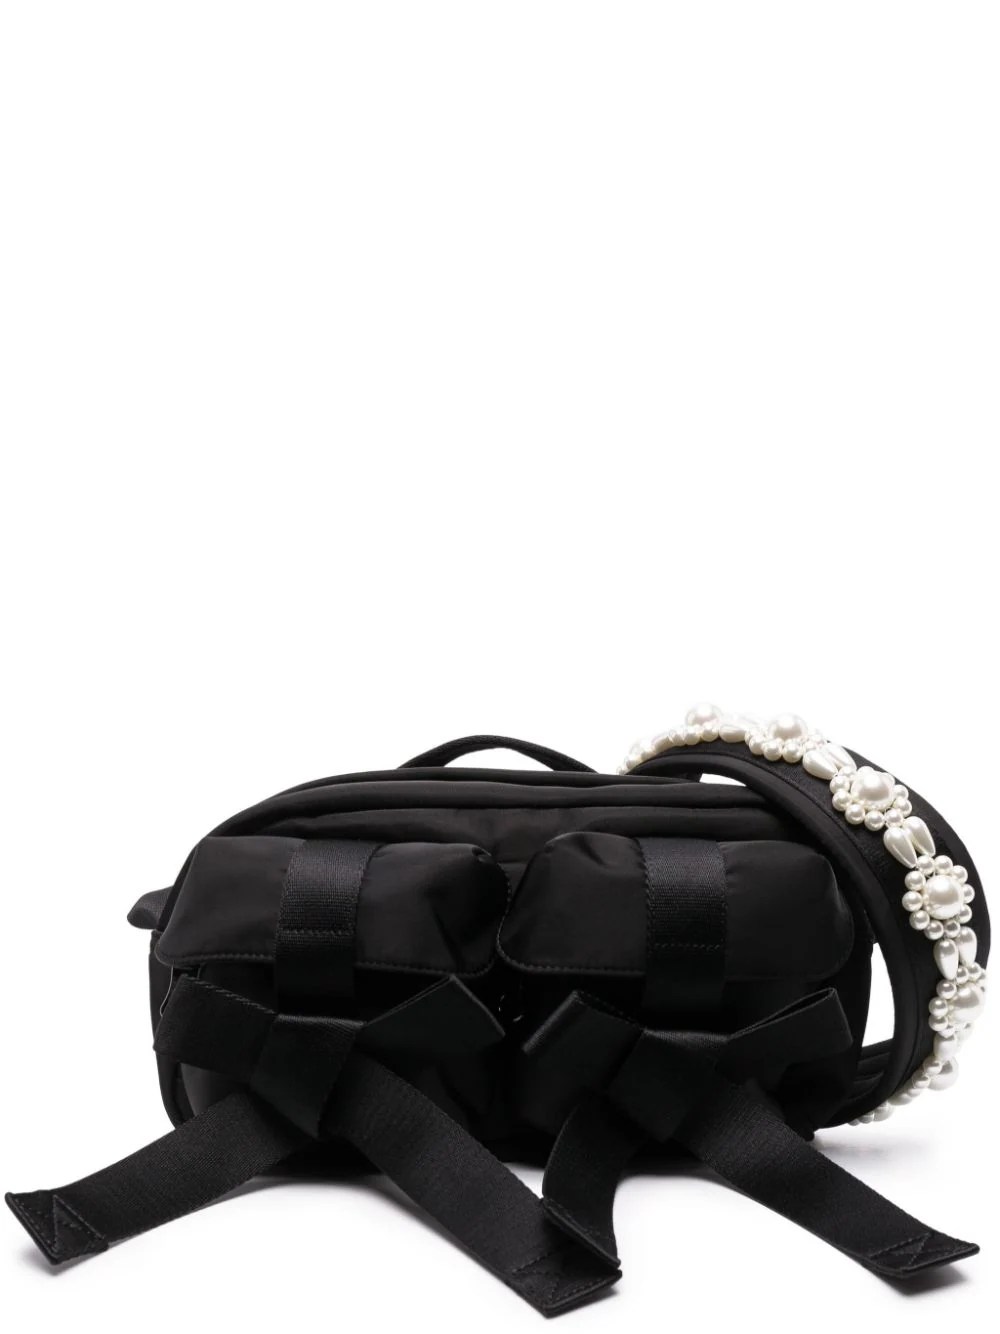 Bow-detail faux pearl-embellished tote bag, £550, Simone Rocha